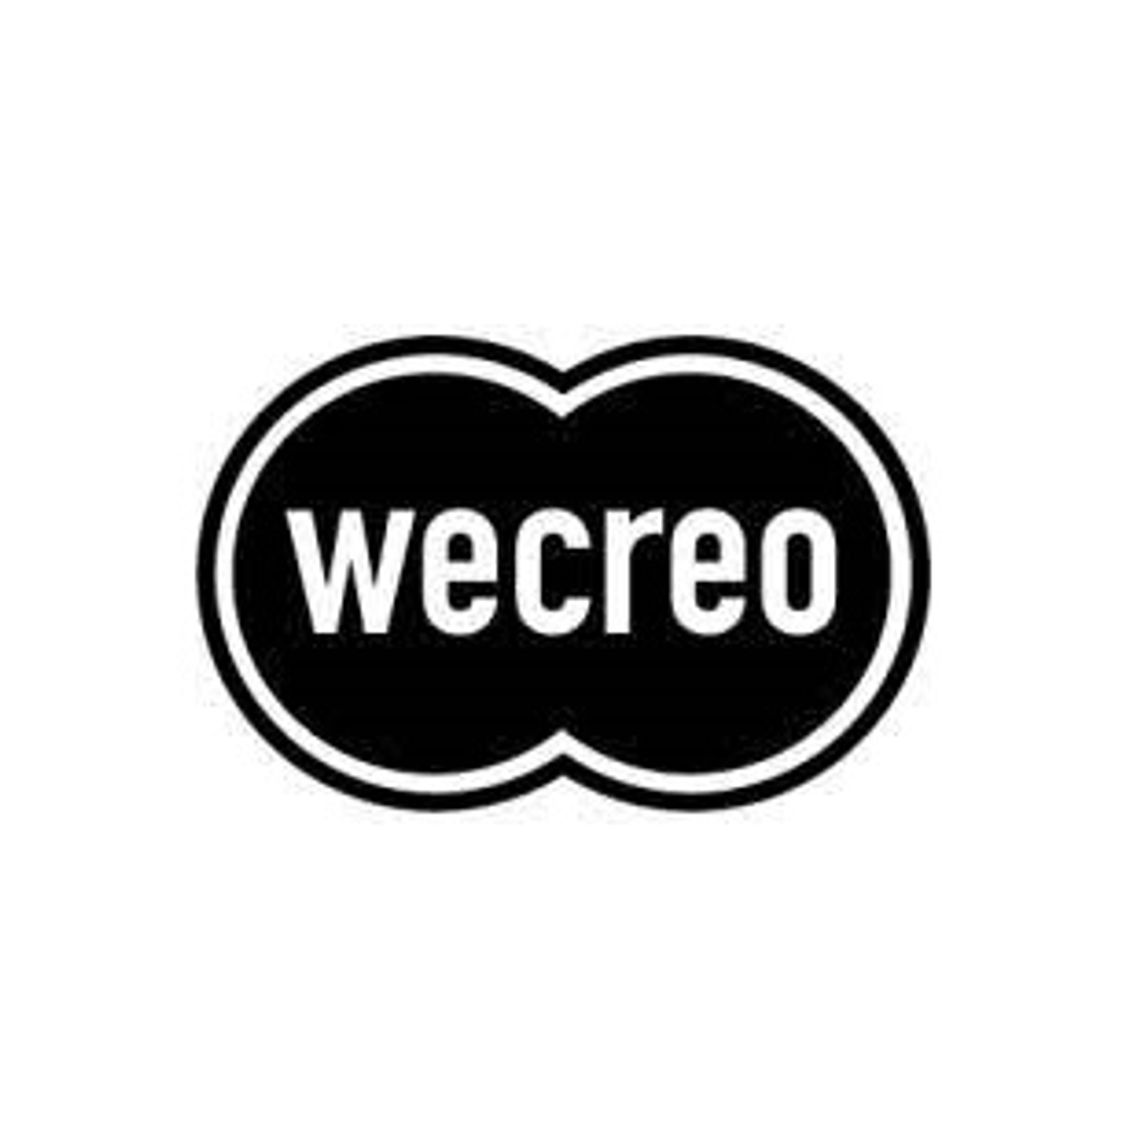 Platformy e-learningowe | wecreo.com